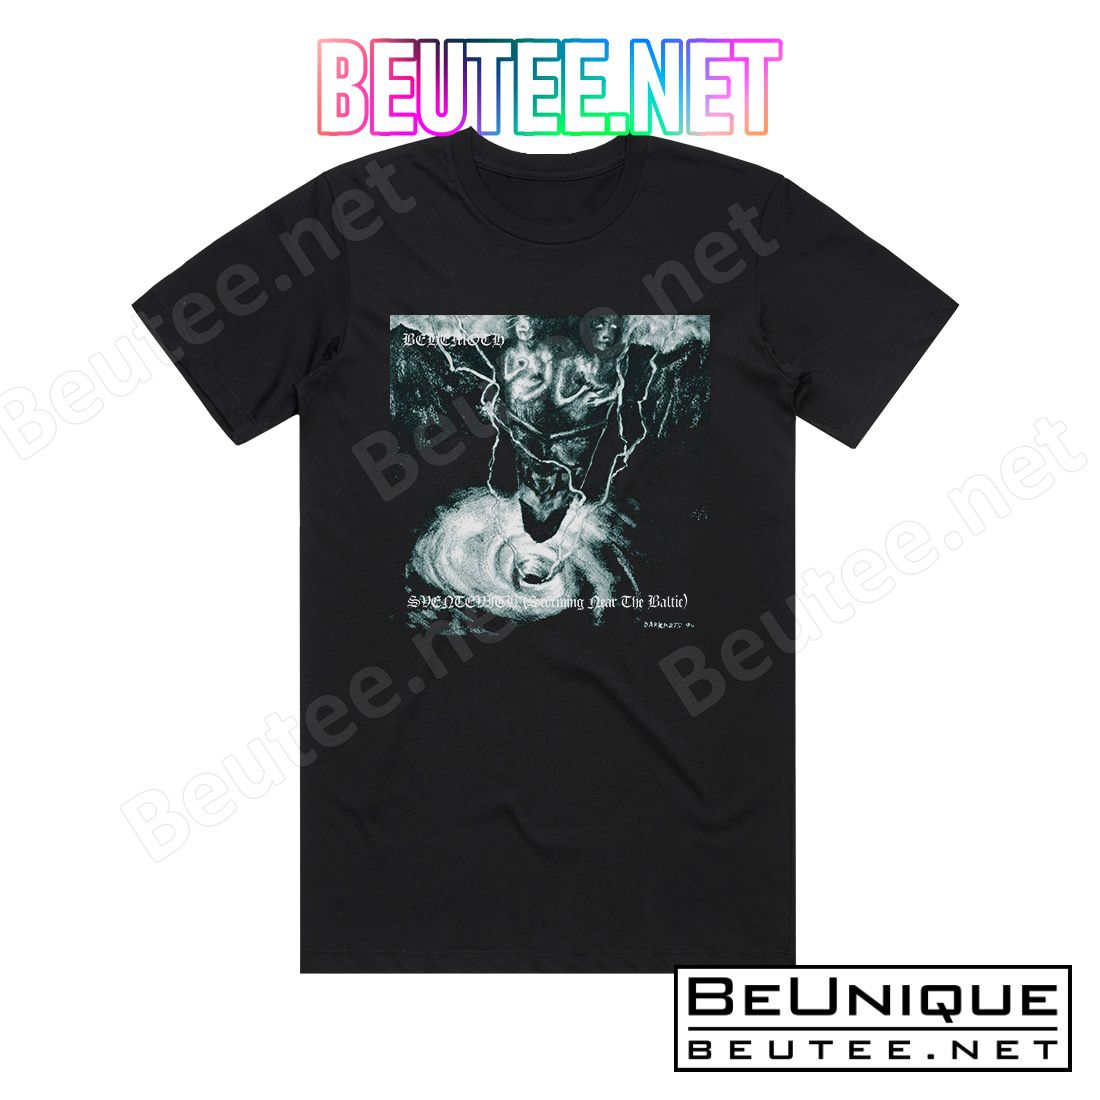 Behemoth Sventevith Storming Near The Baltic 3 Album Cover T-Shirt